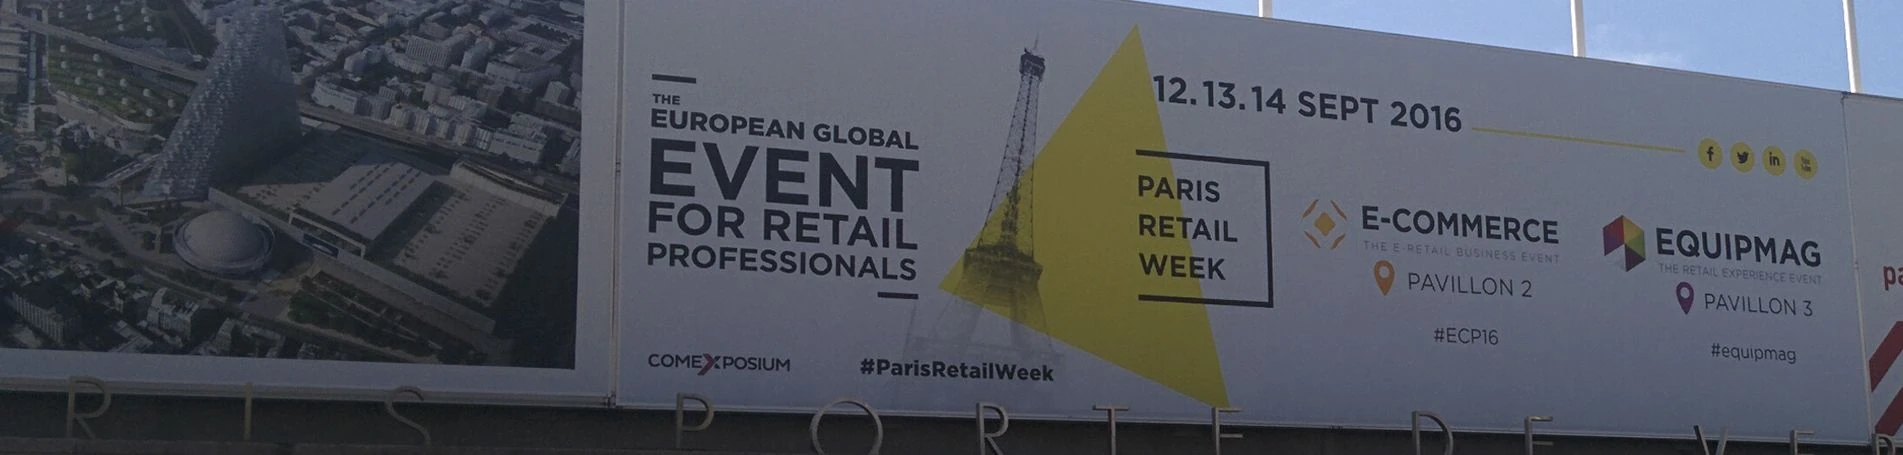 Lifting Group Attends Paris Retail Week 2016